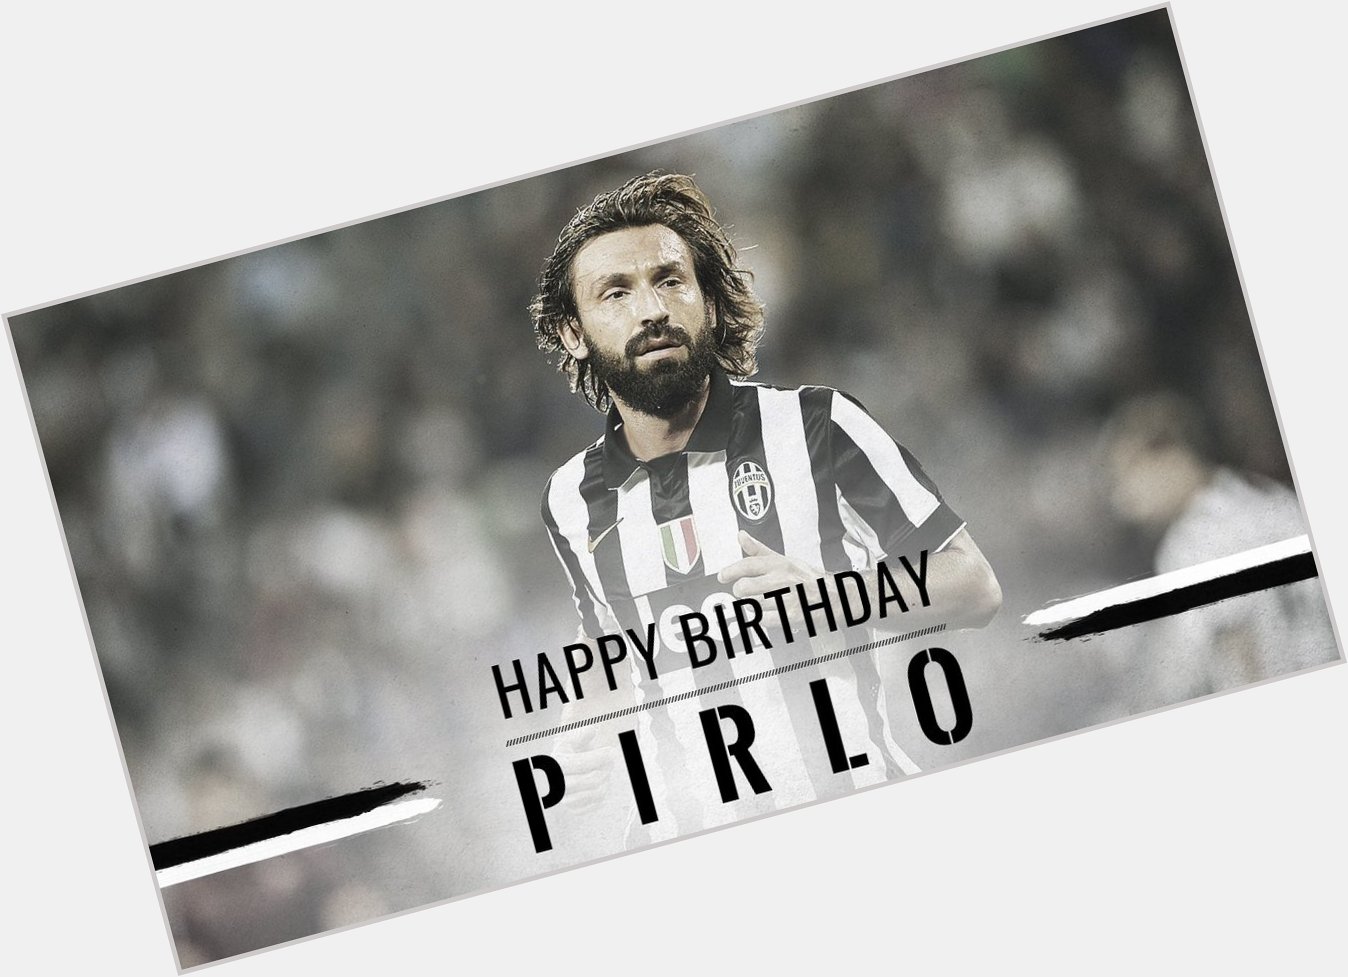 Happy birthday (38) Andrea Pirlo, one of the classiest midfielders of his generation 